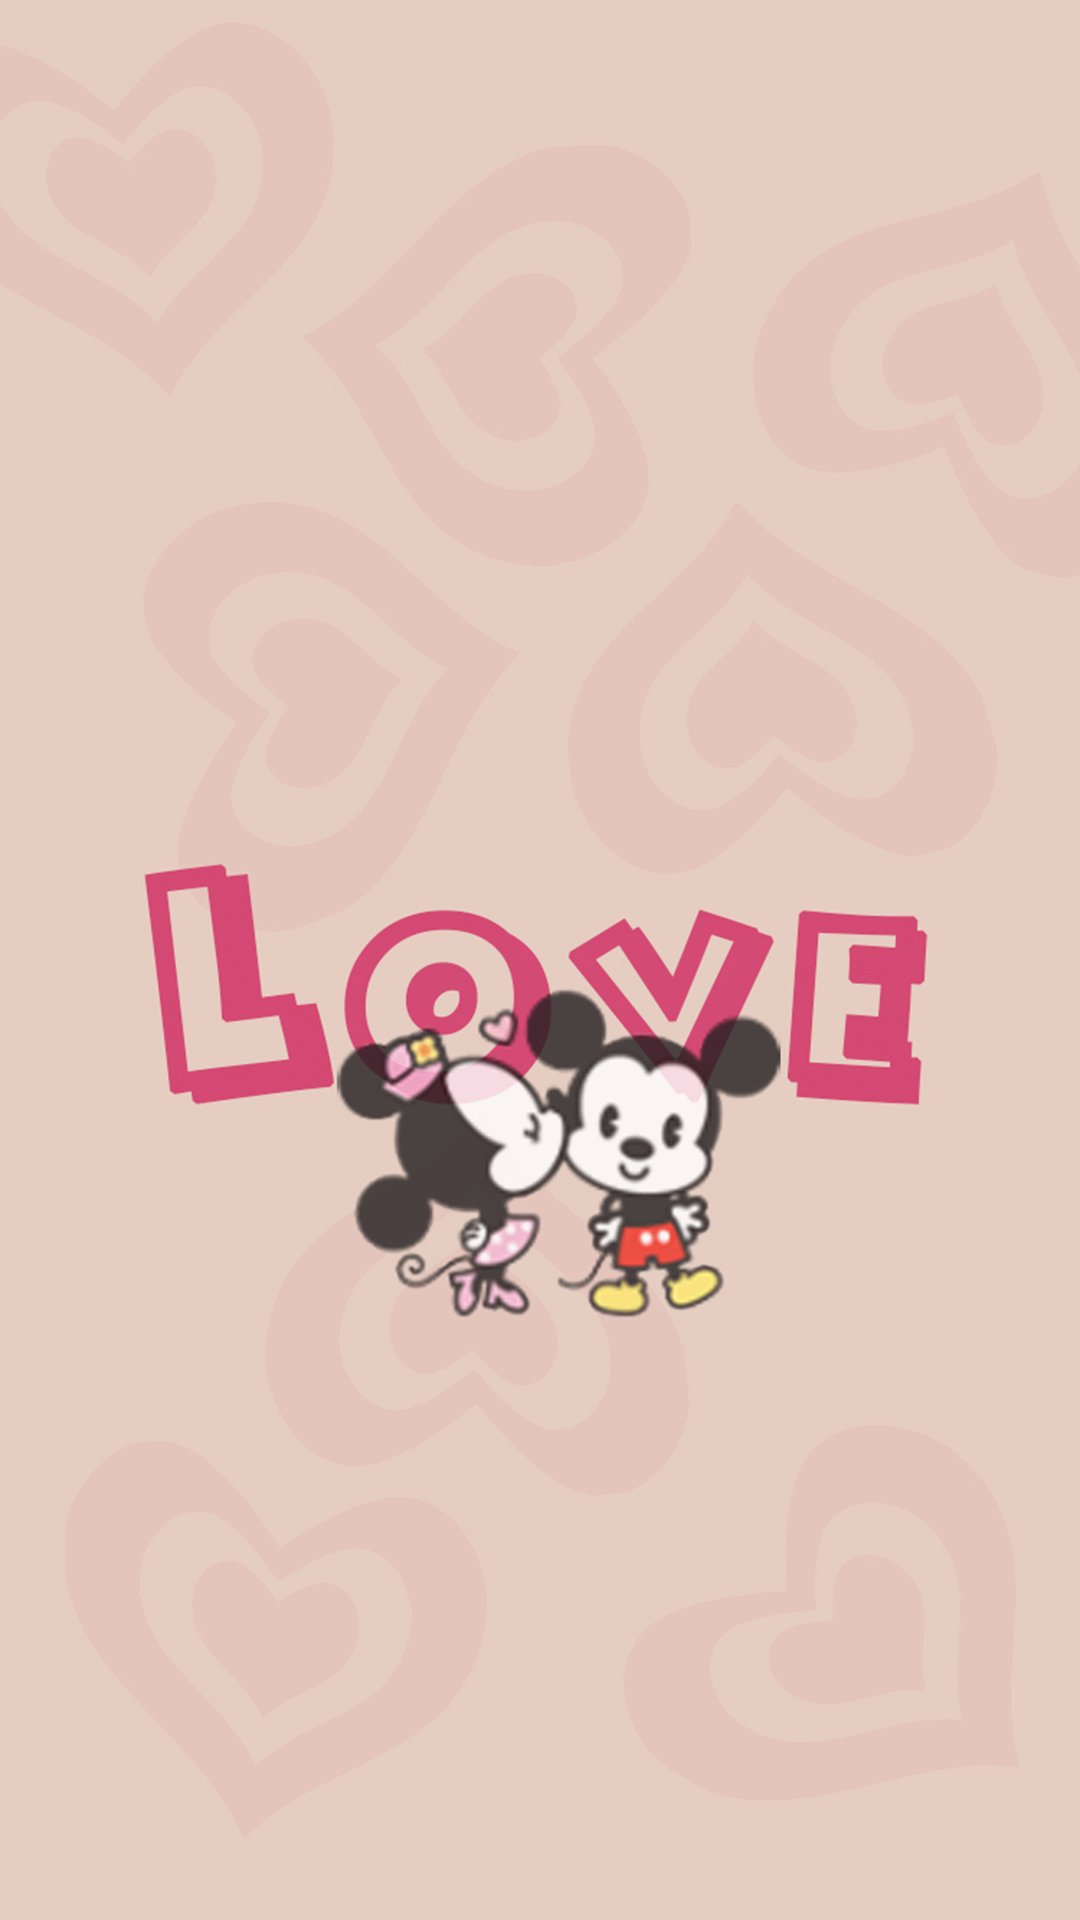 46+] Minnie Mouse iPhone Wallpaper - WallpaperSafari